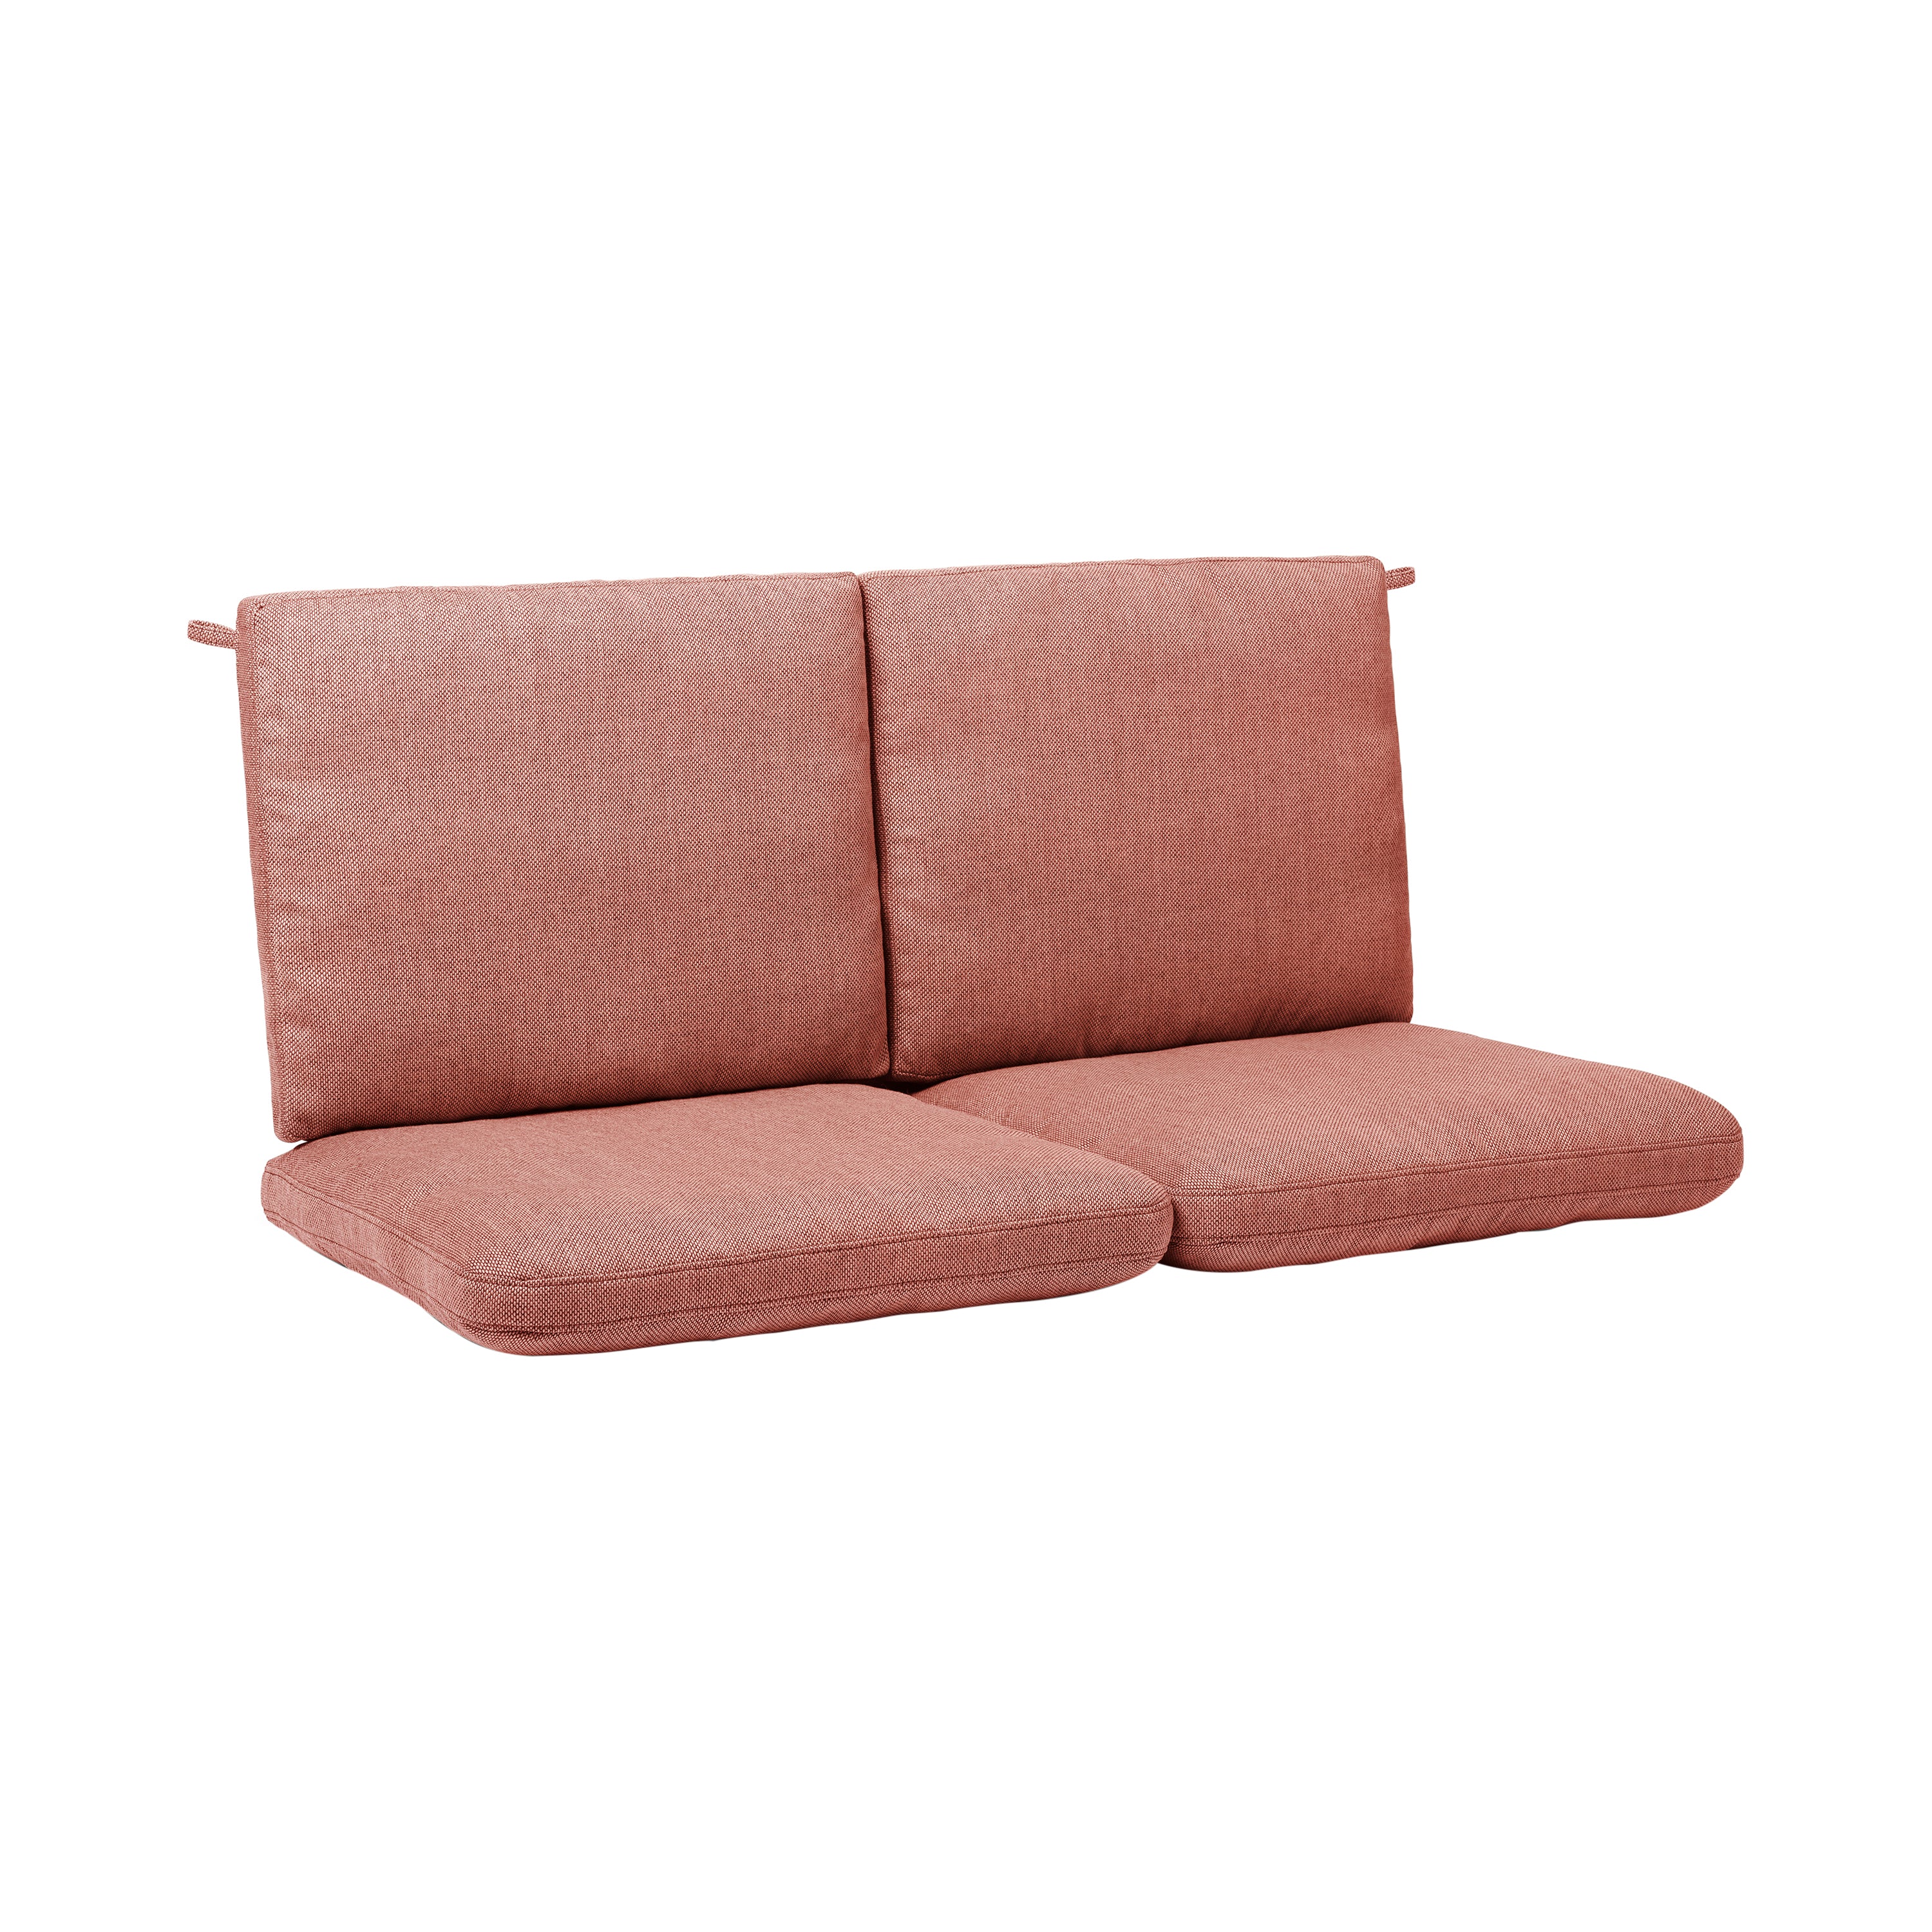 OW149-2 Colonial Sofa